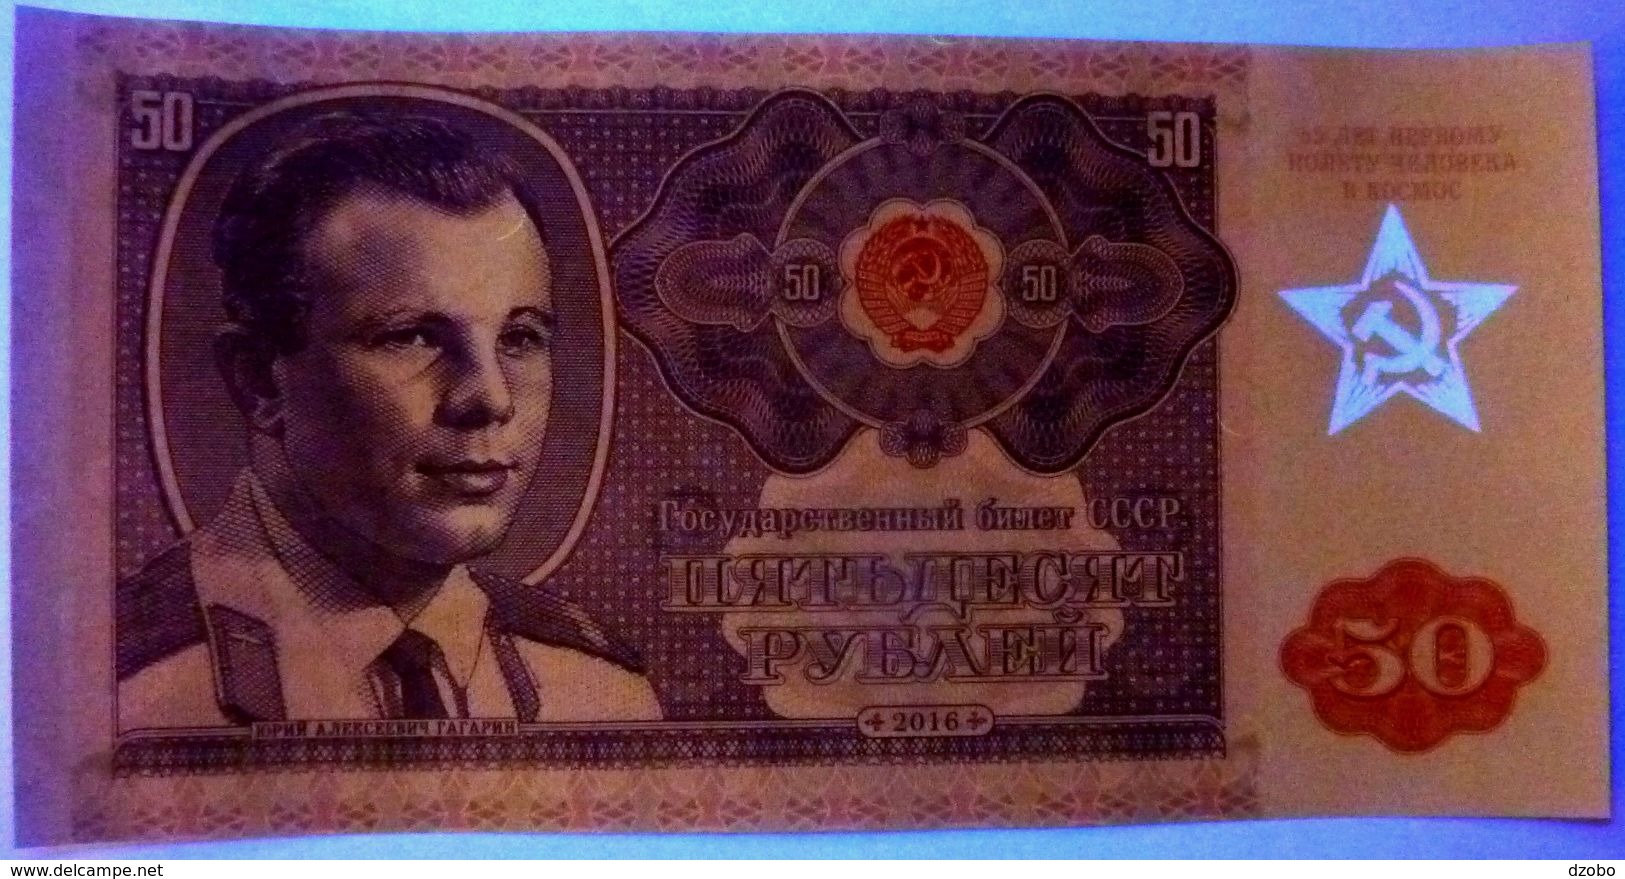 709-RUSSIA 50 Rubel 55 Years Since The 1st Kozmonauta Flight UdSSR NOT LEGAL TENDER UNC 600 Pcs 2016 - Other - Europe